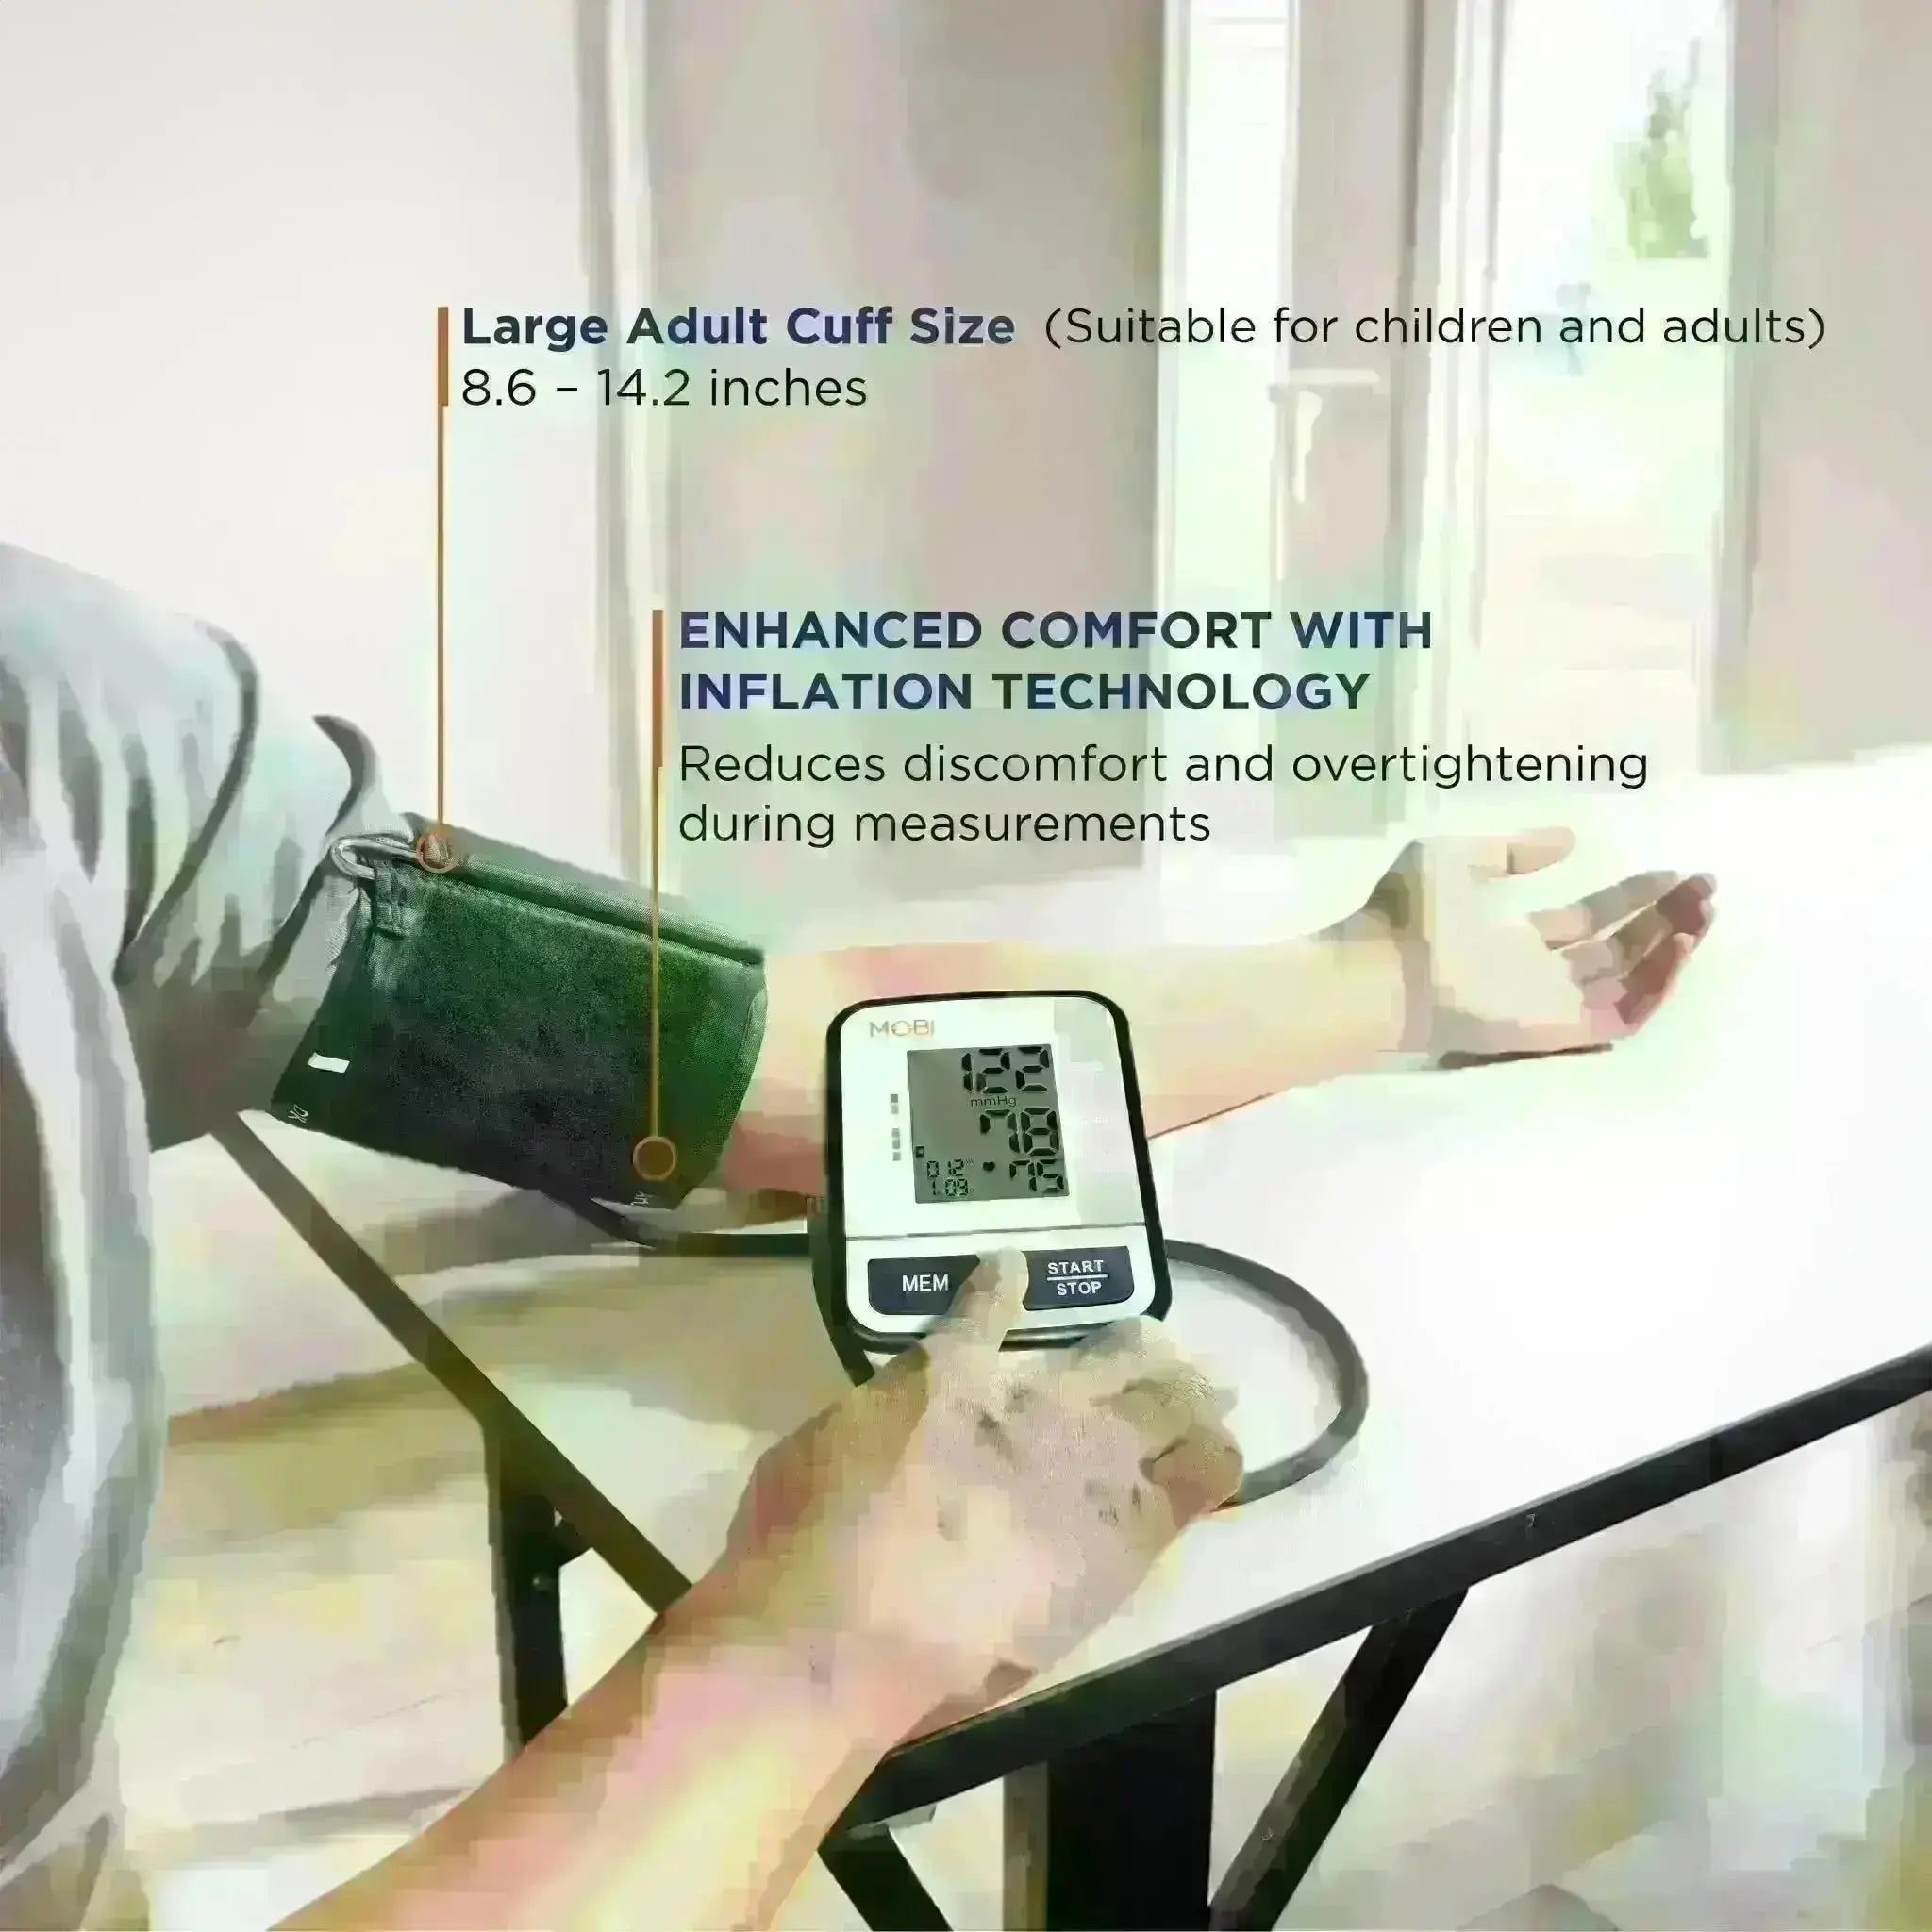 MOBI Health Arm Blood Pressure Monitor